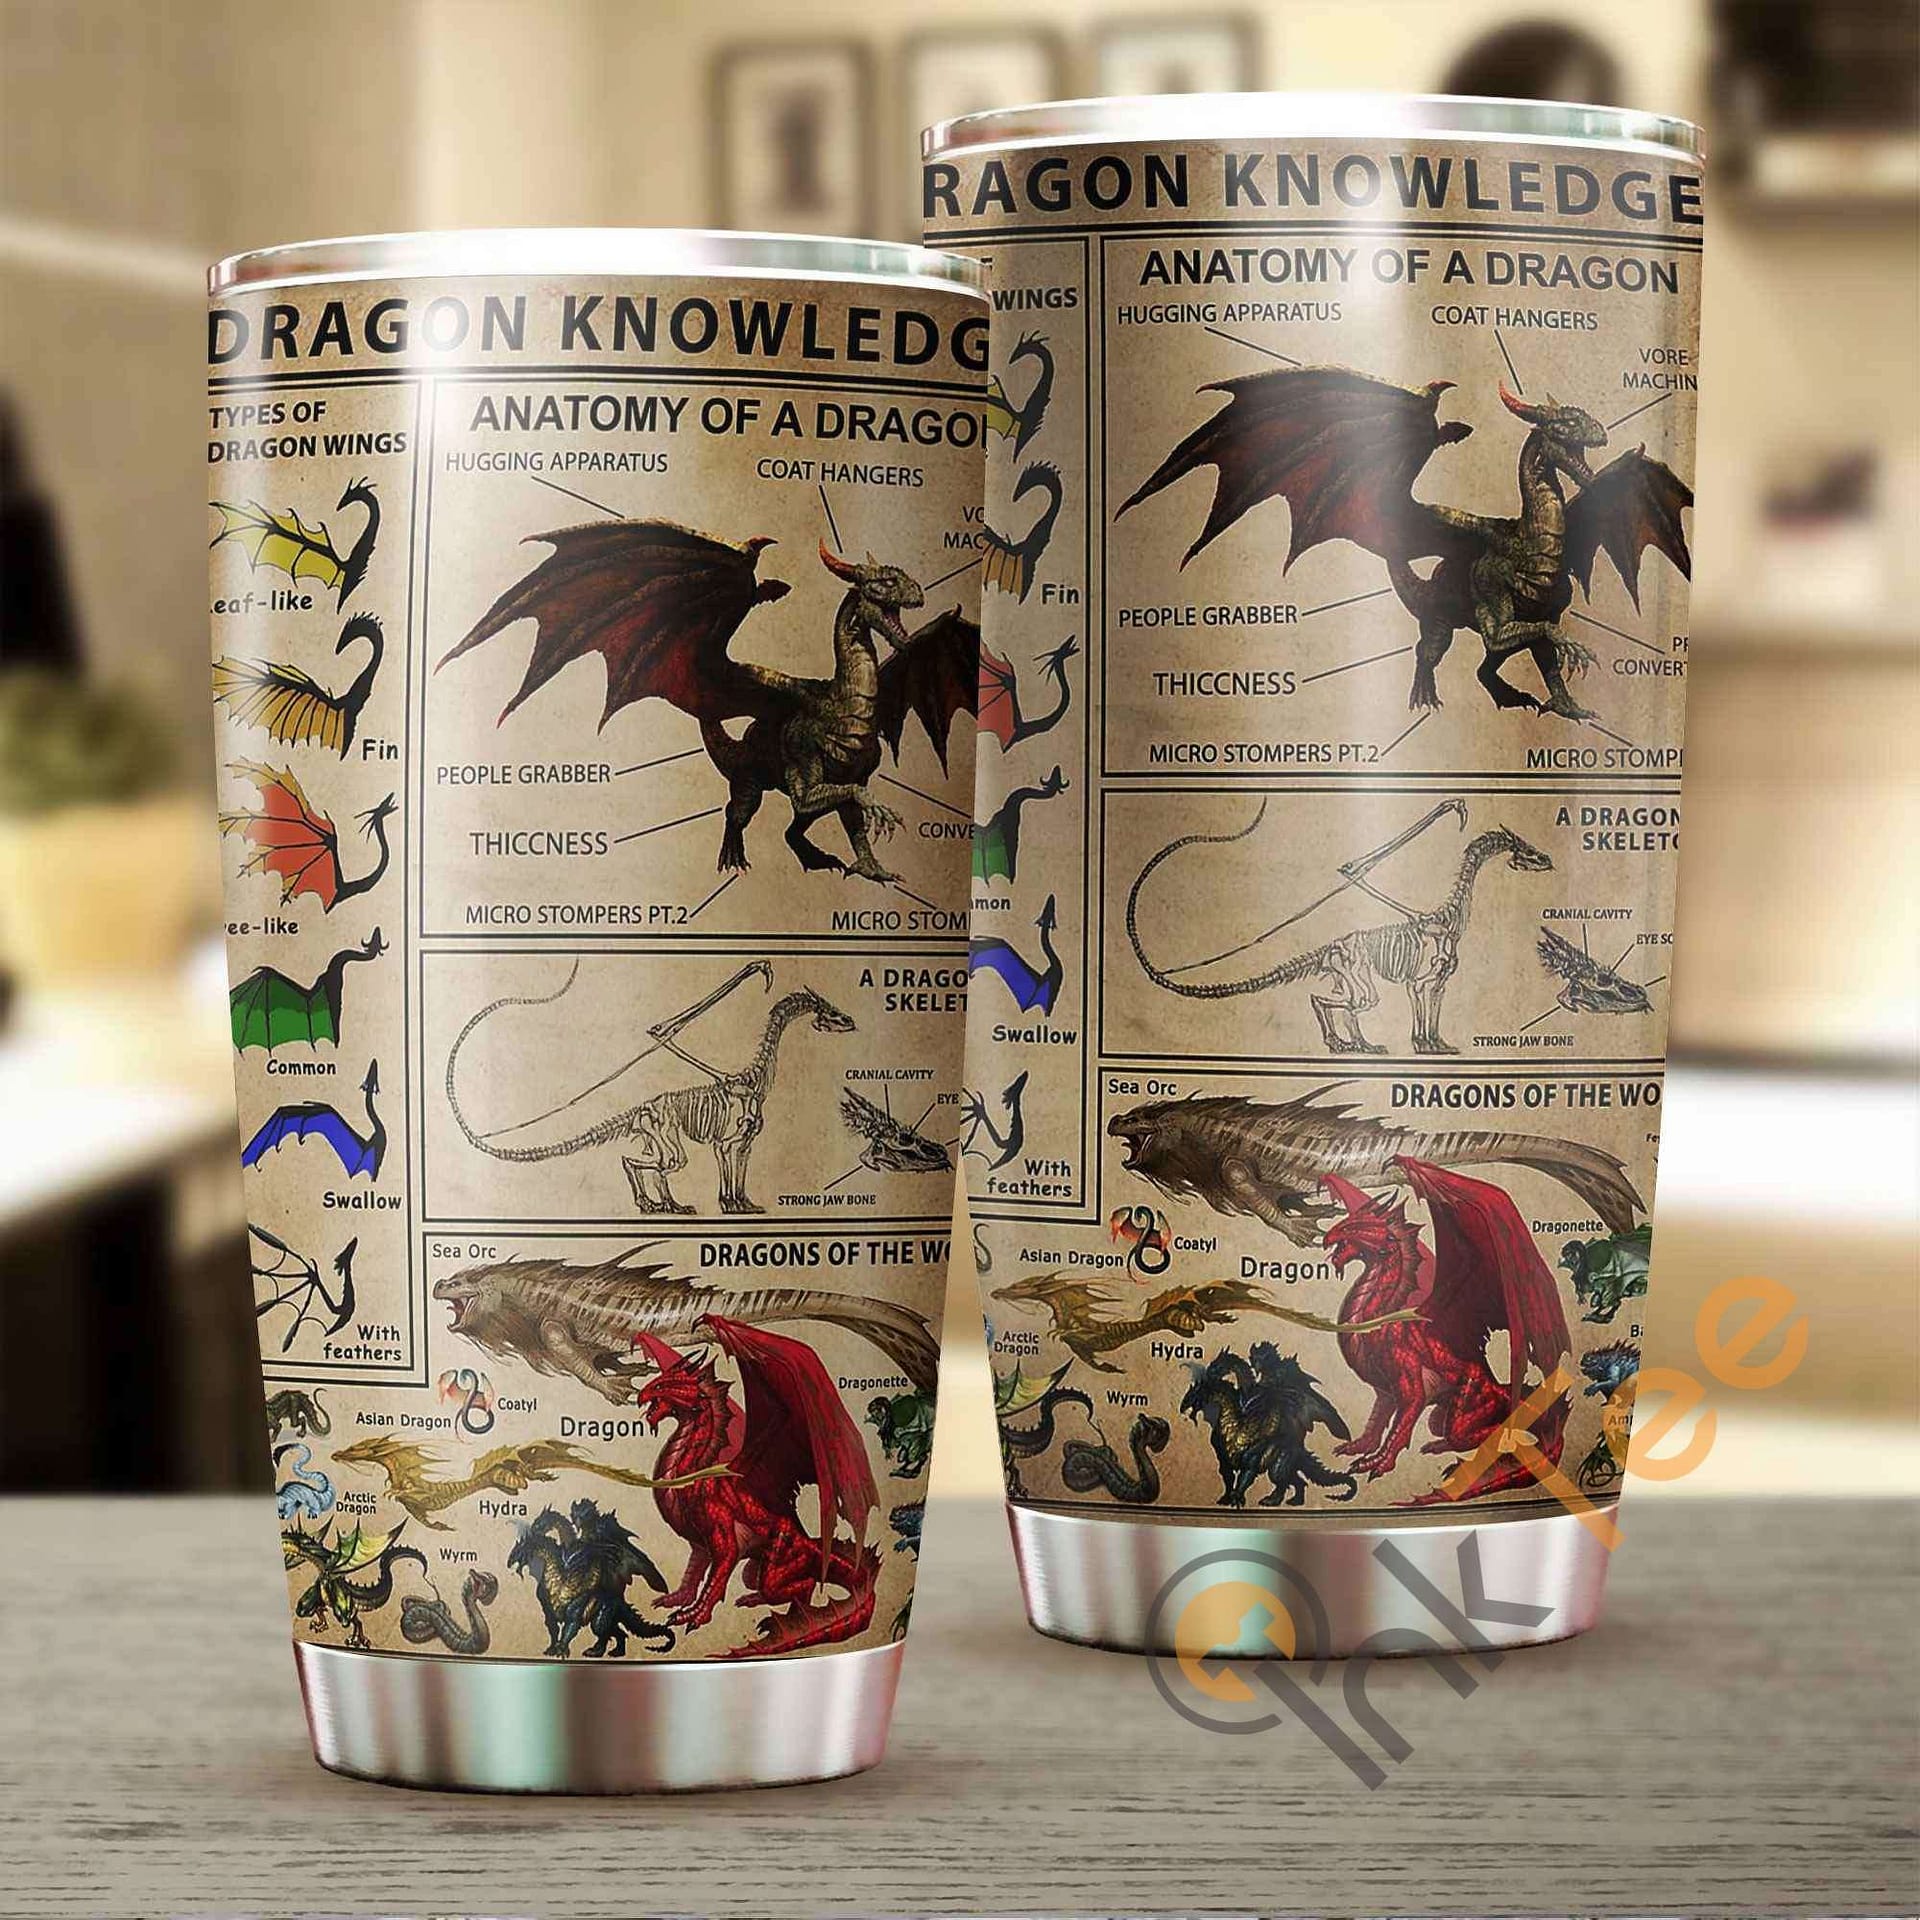 Dragon Knowledge Amazon Best Seller Sku 2985 Stainless Steel Tumbler